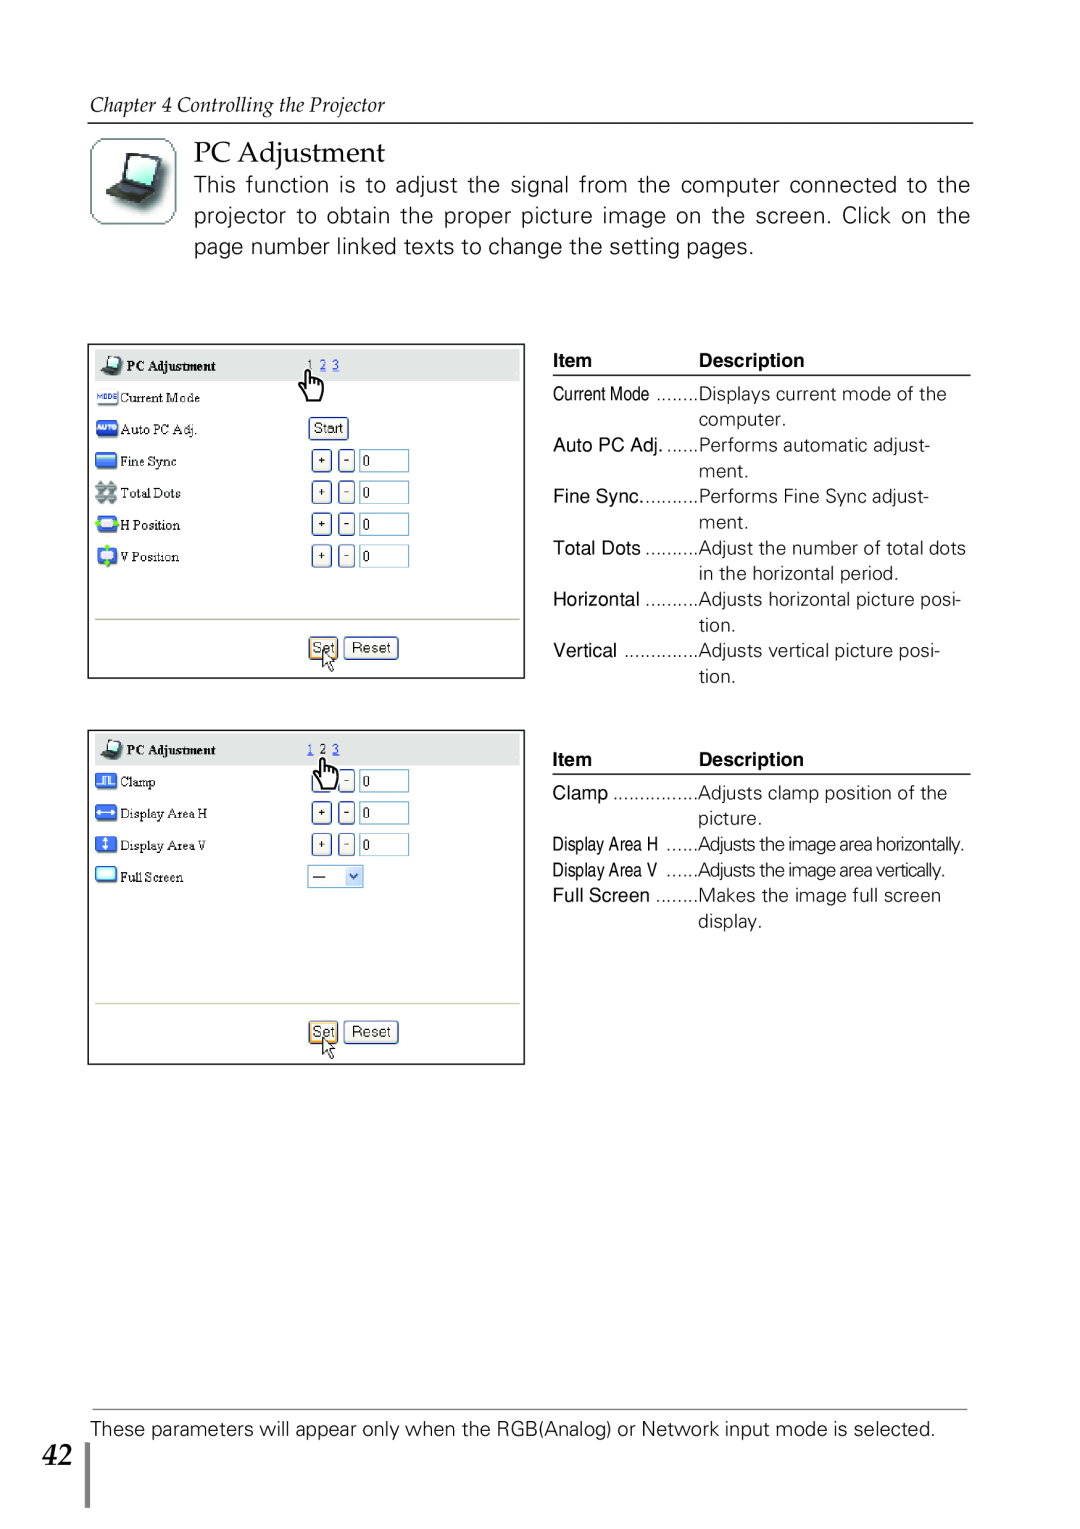 Eiki PjNET-20 owner manual PC Adjustment, Controlling the Projector, Description, Auto PC Adj, Horizontal, Full Screen 